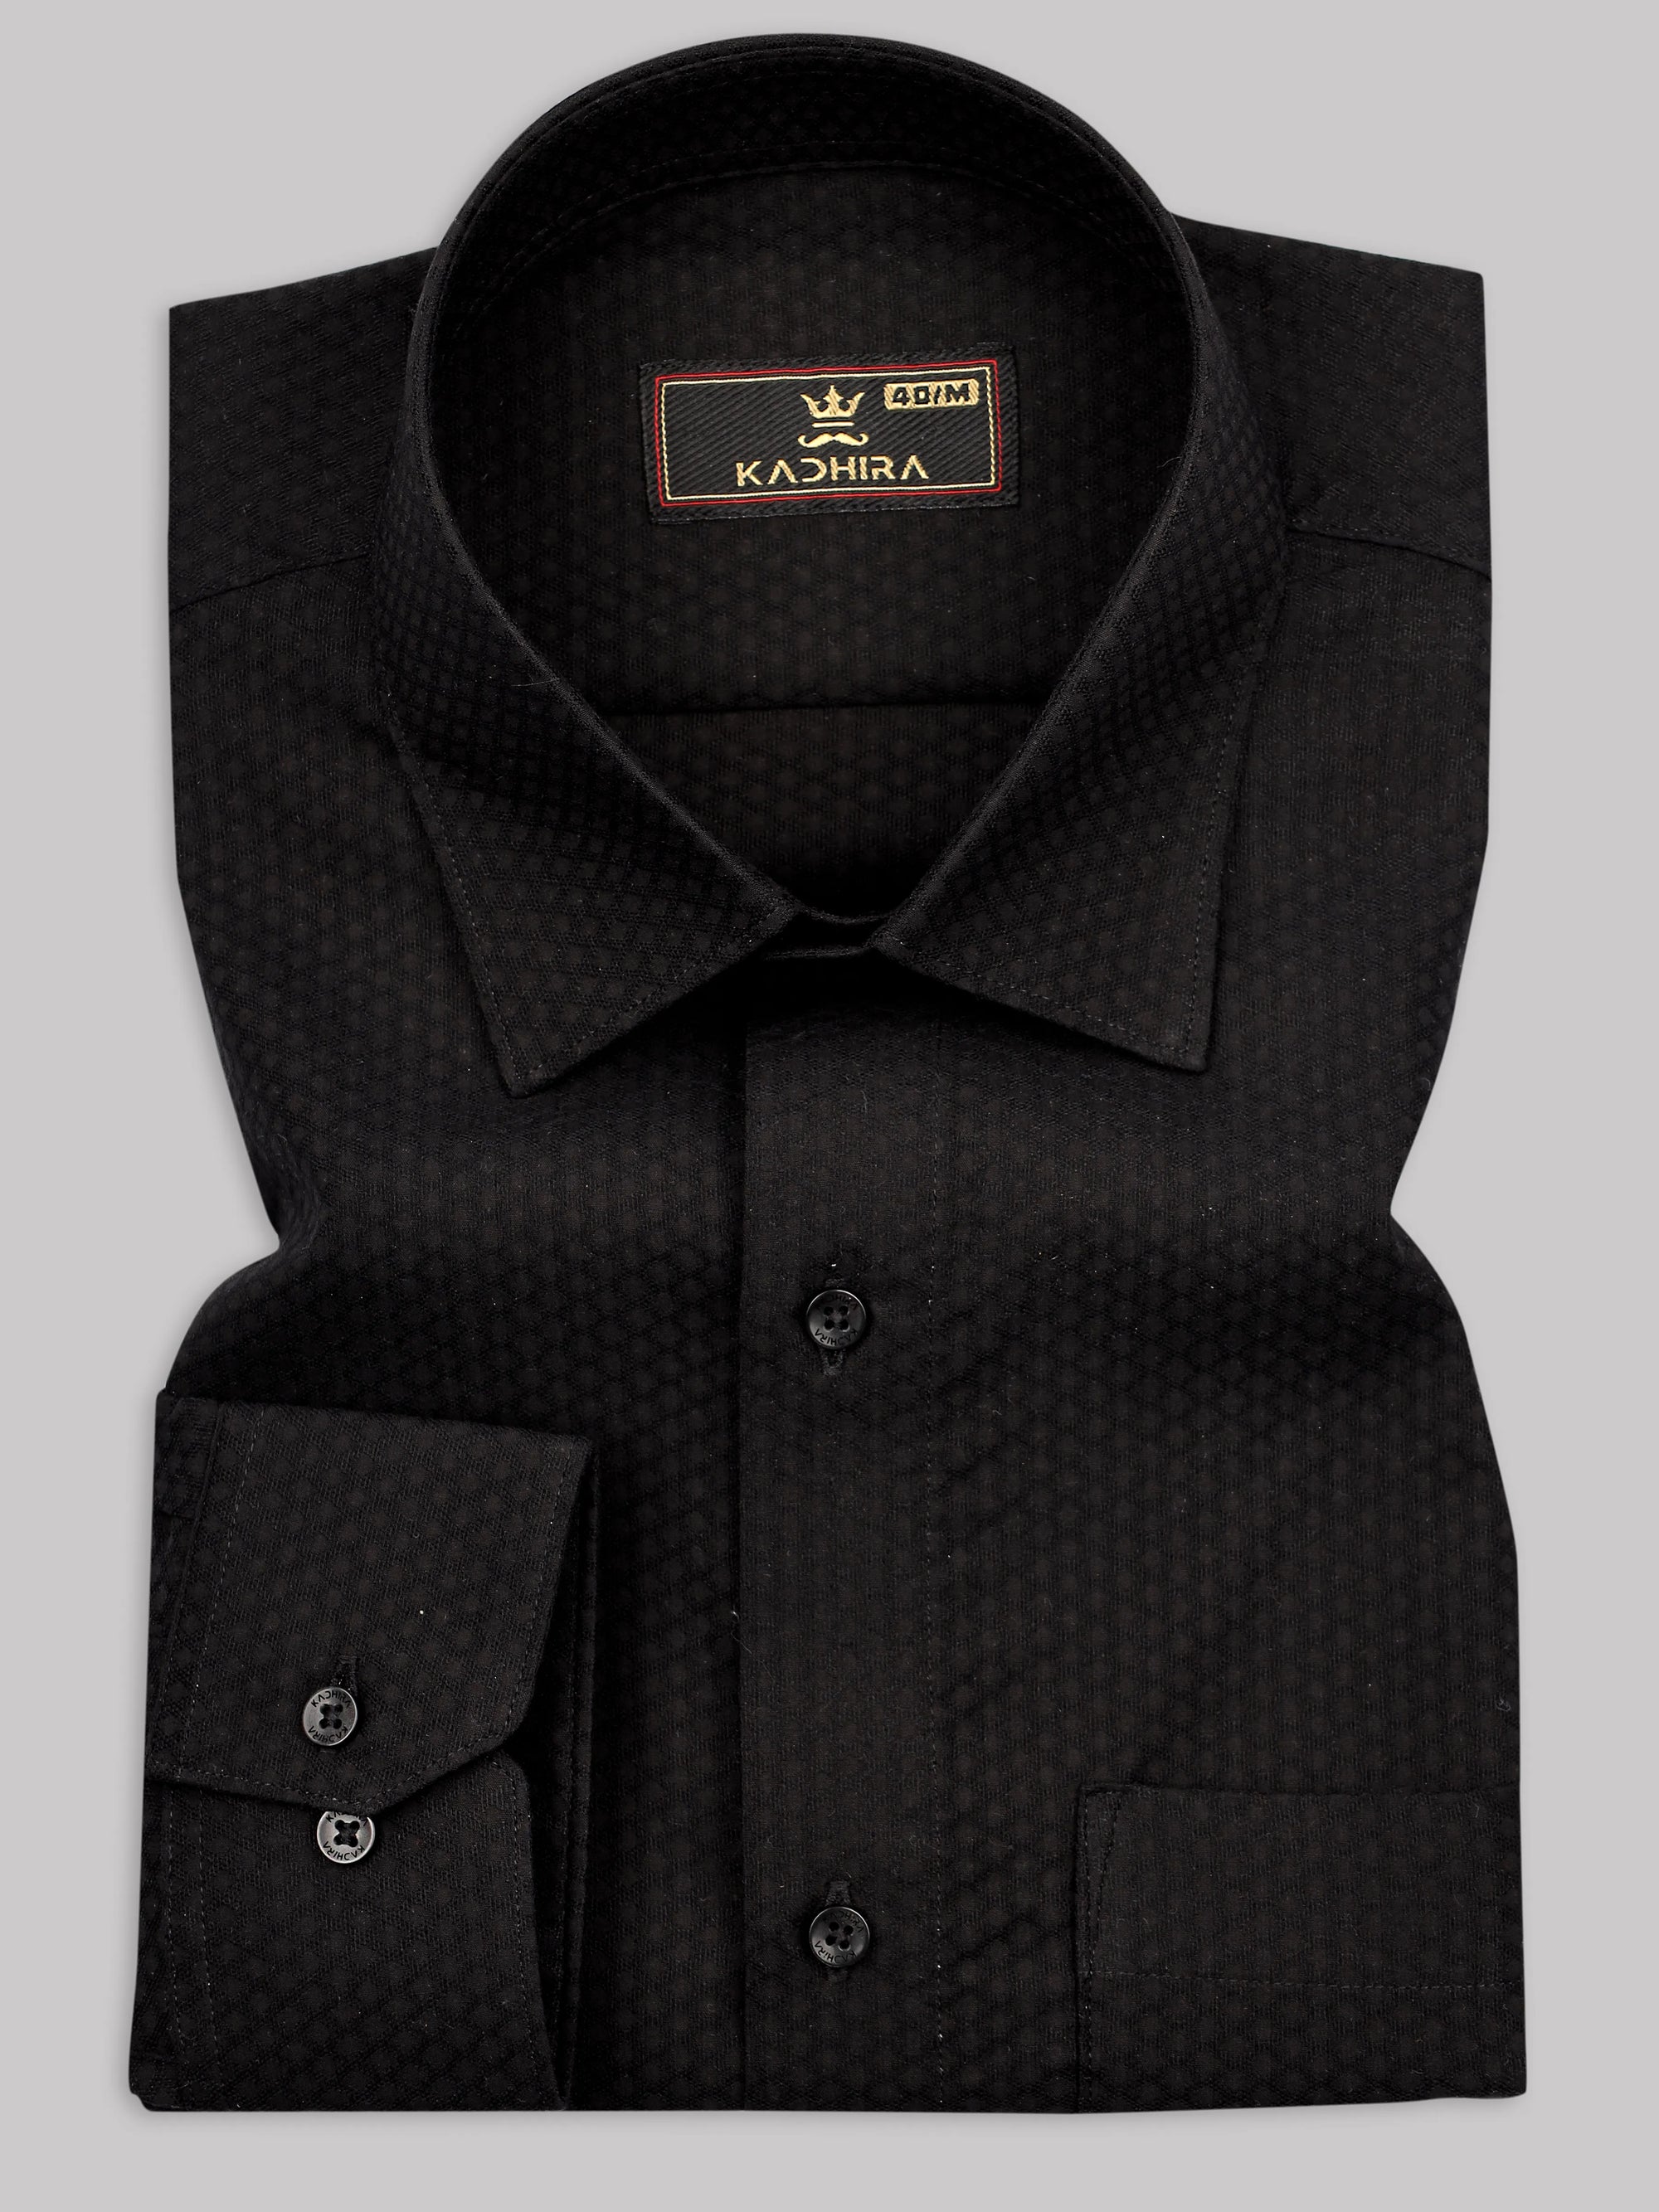 Super Black Dobby Textured Premium Cotton Shirt